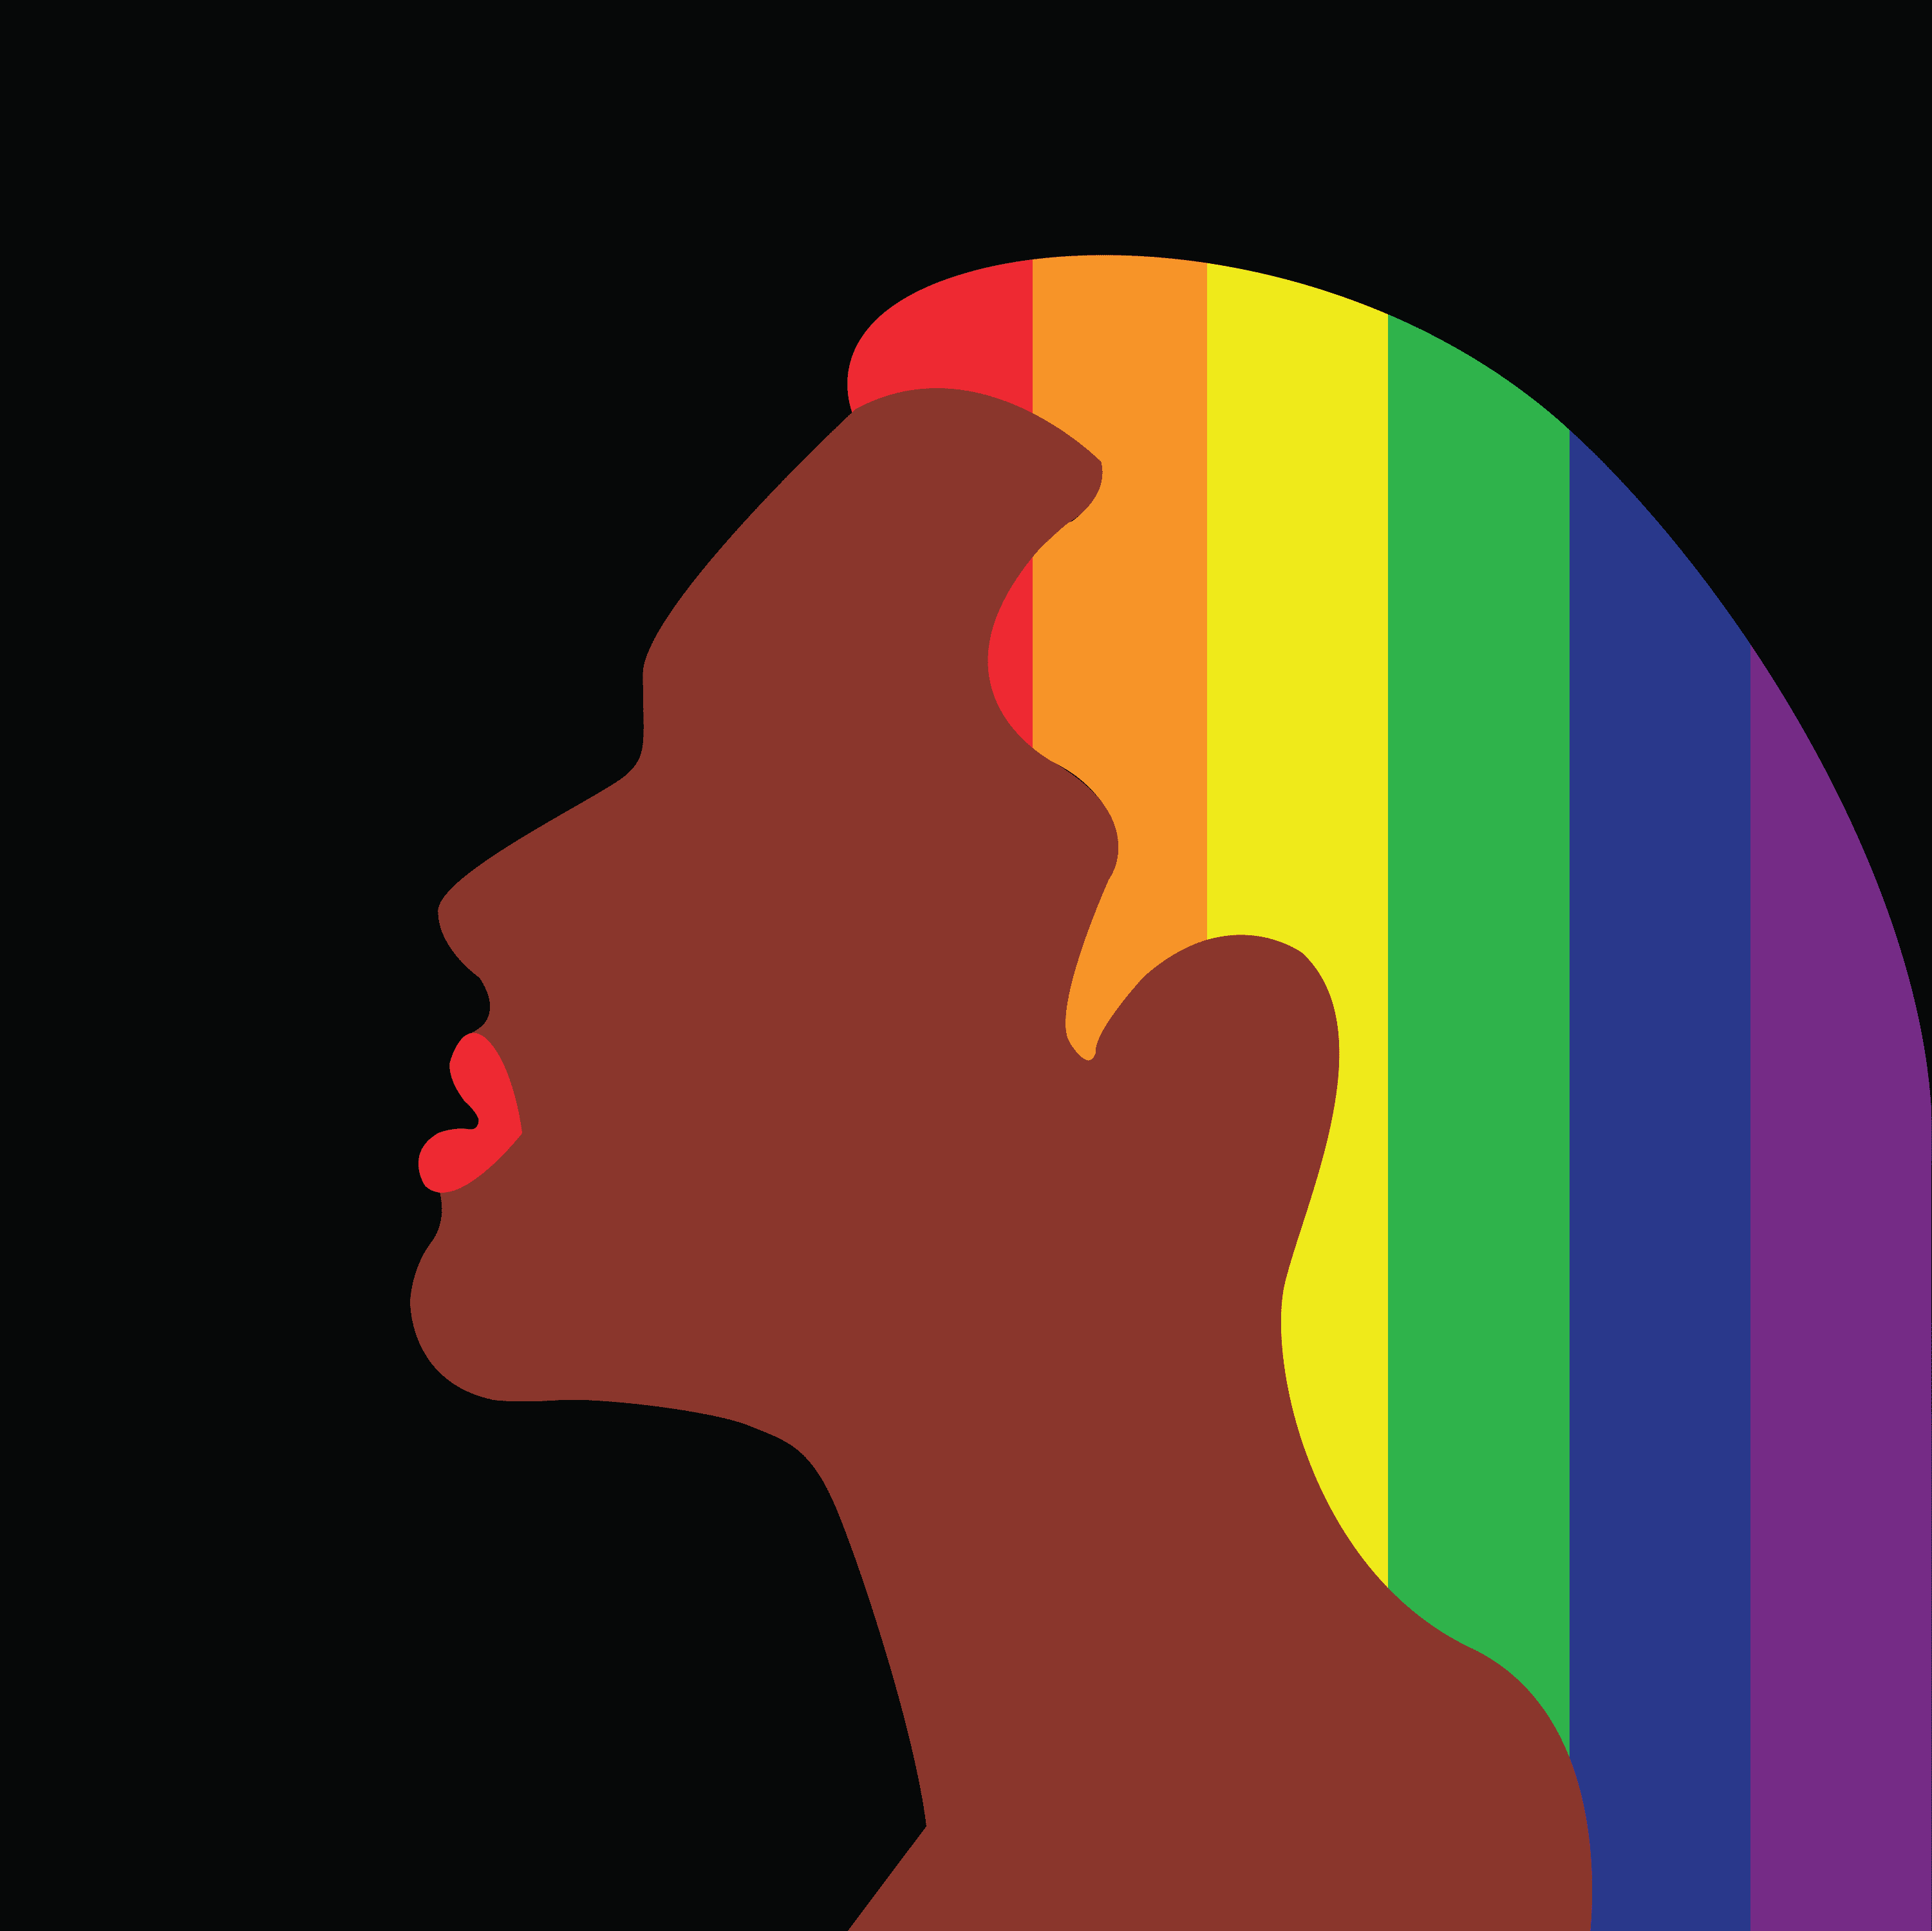 HMI, pride month, LGBTQIA teens in dire straits via 360 MAGAZINE.